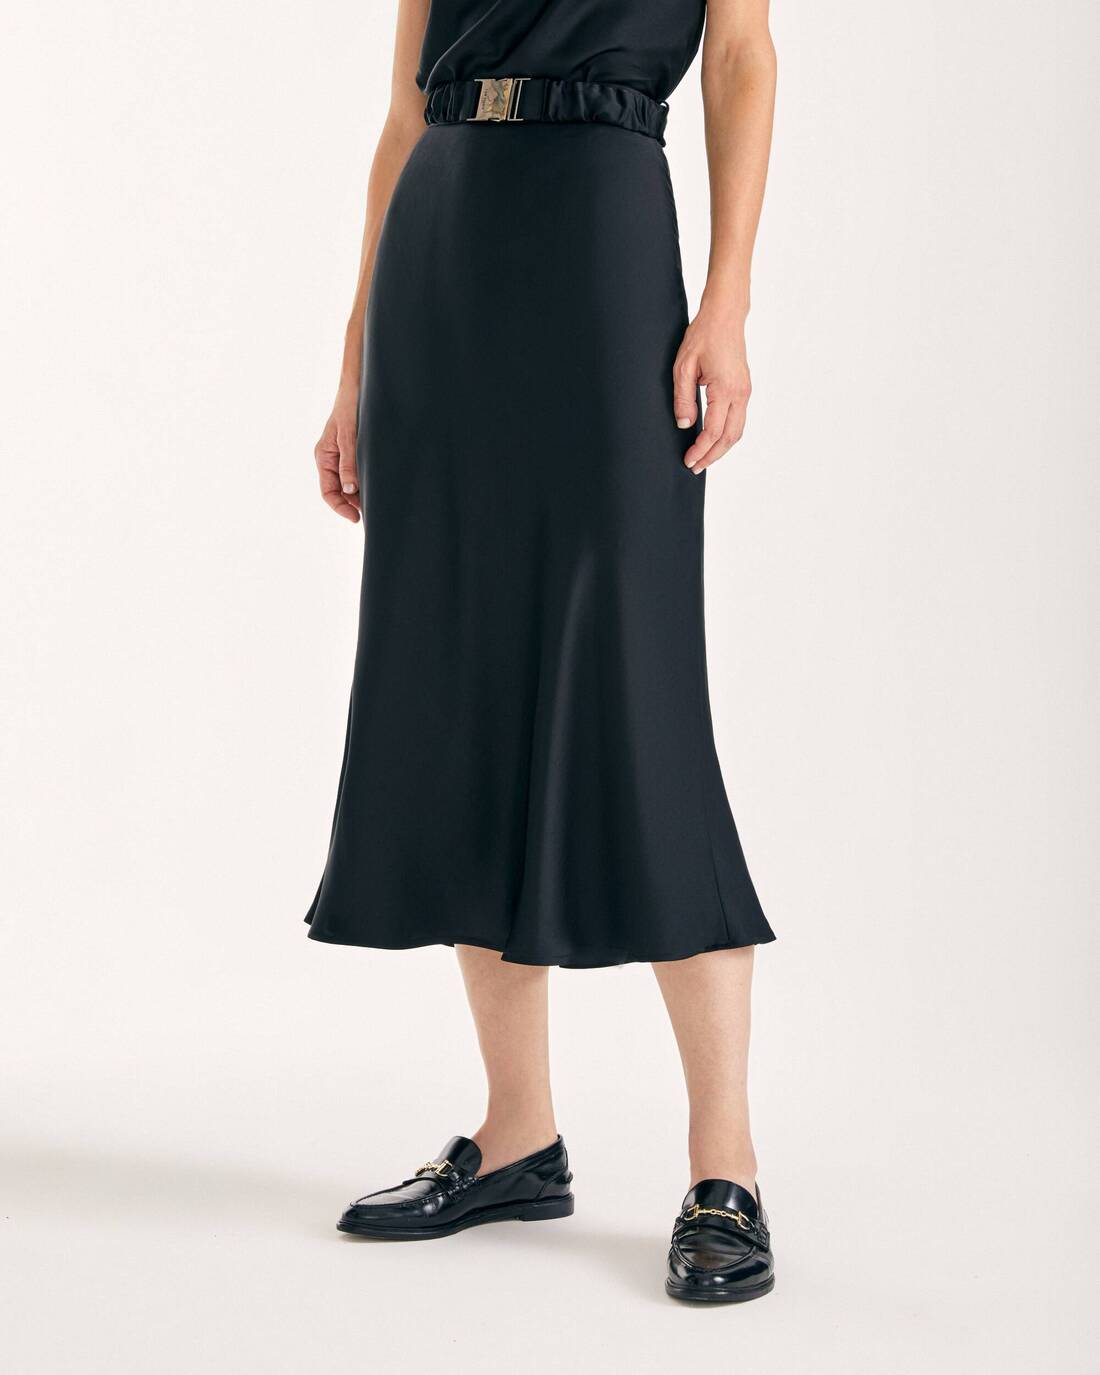 Midi skirt with original belt